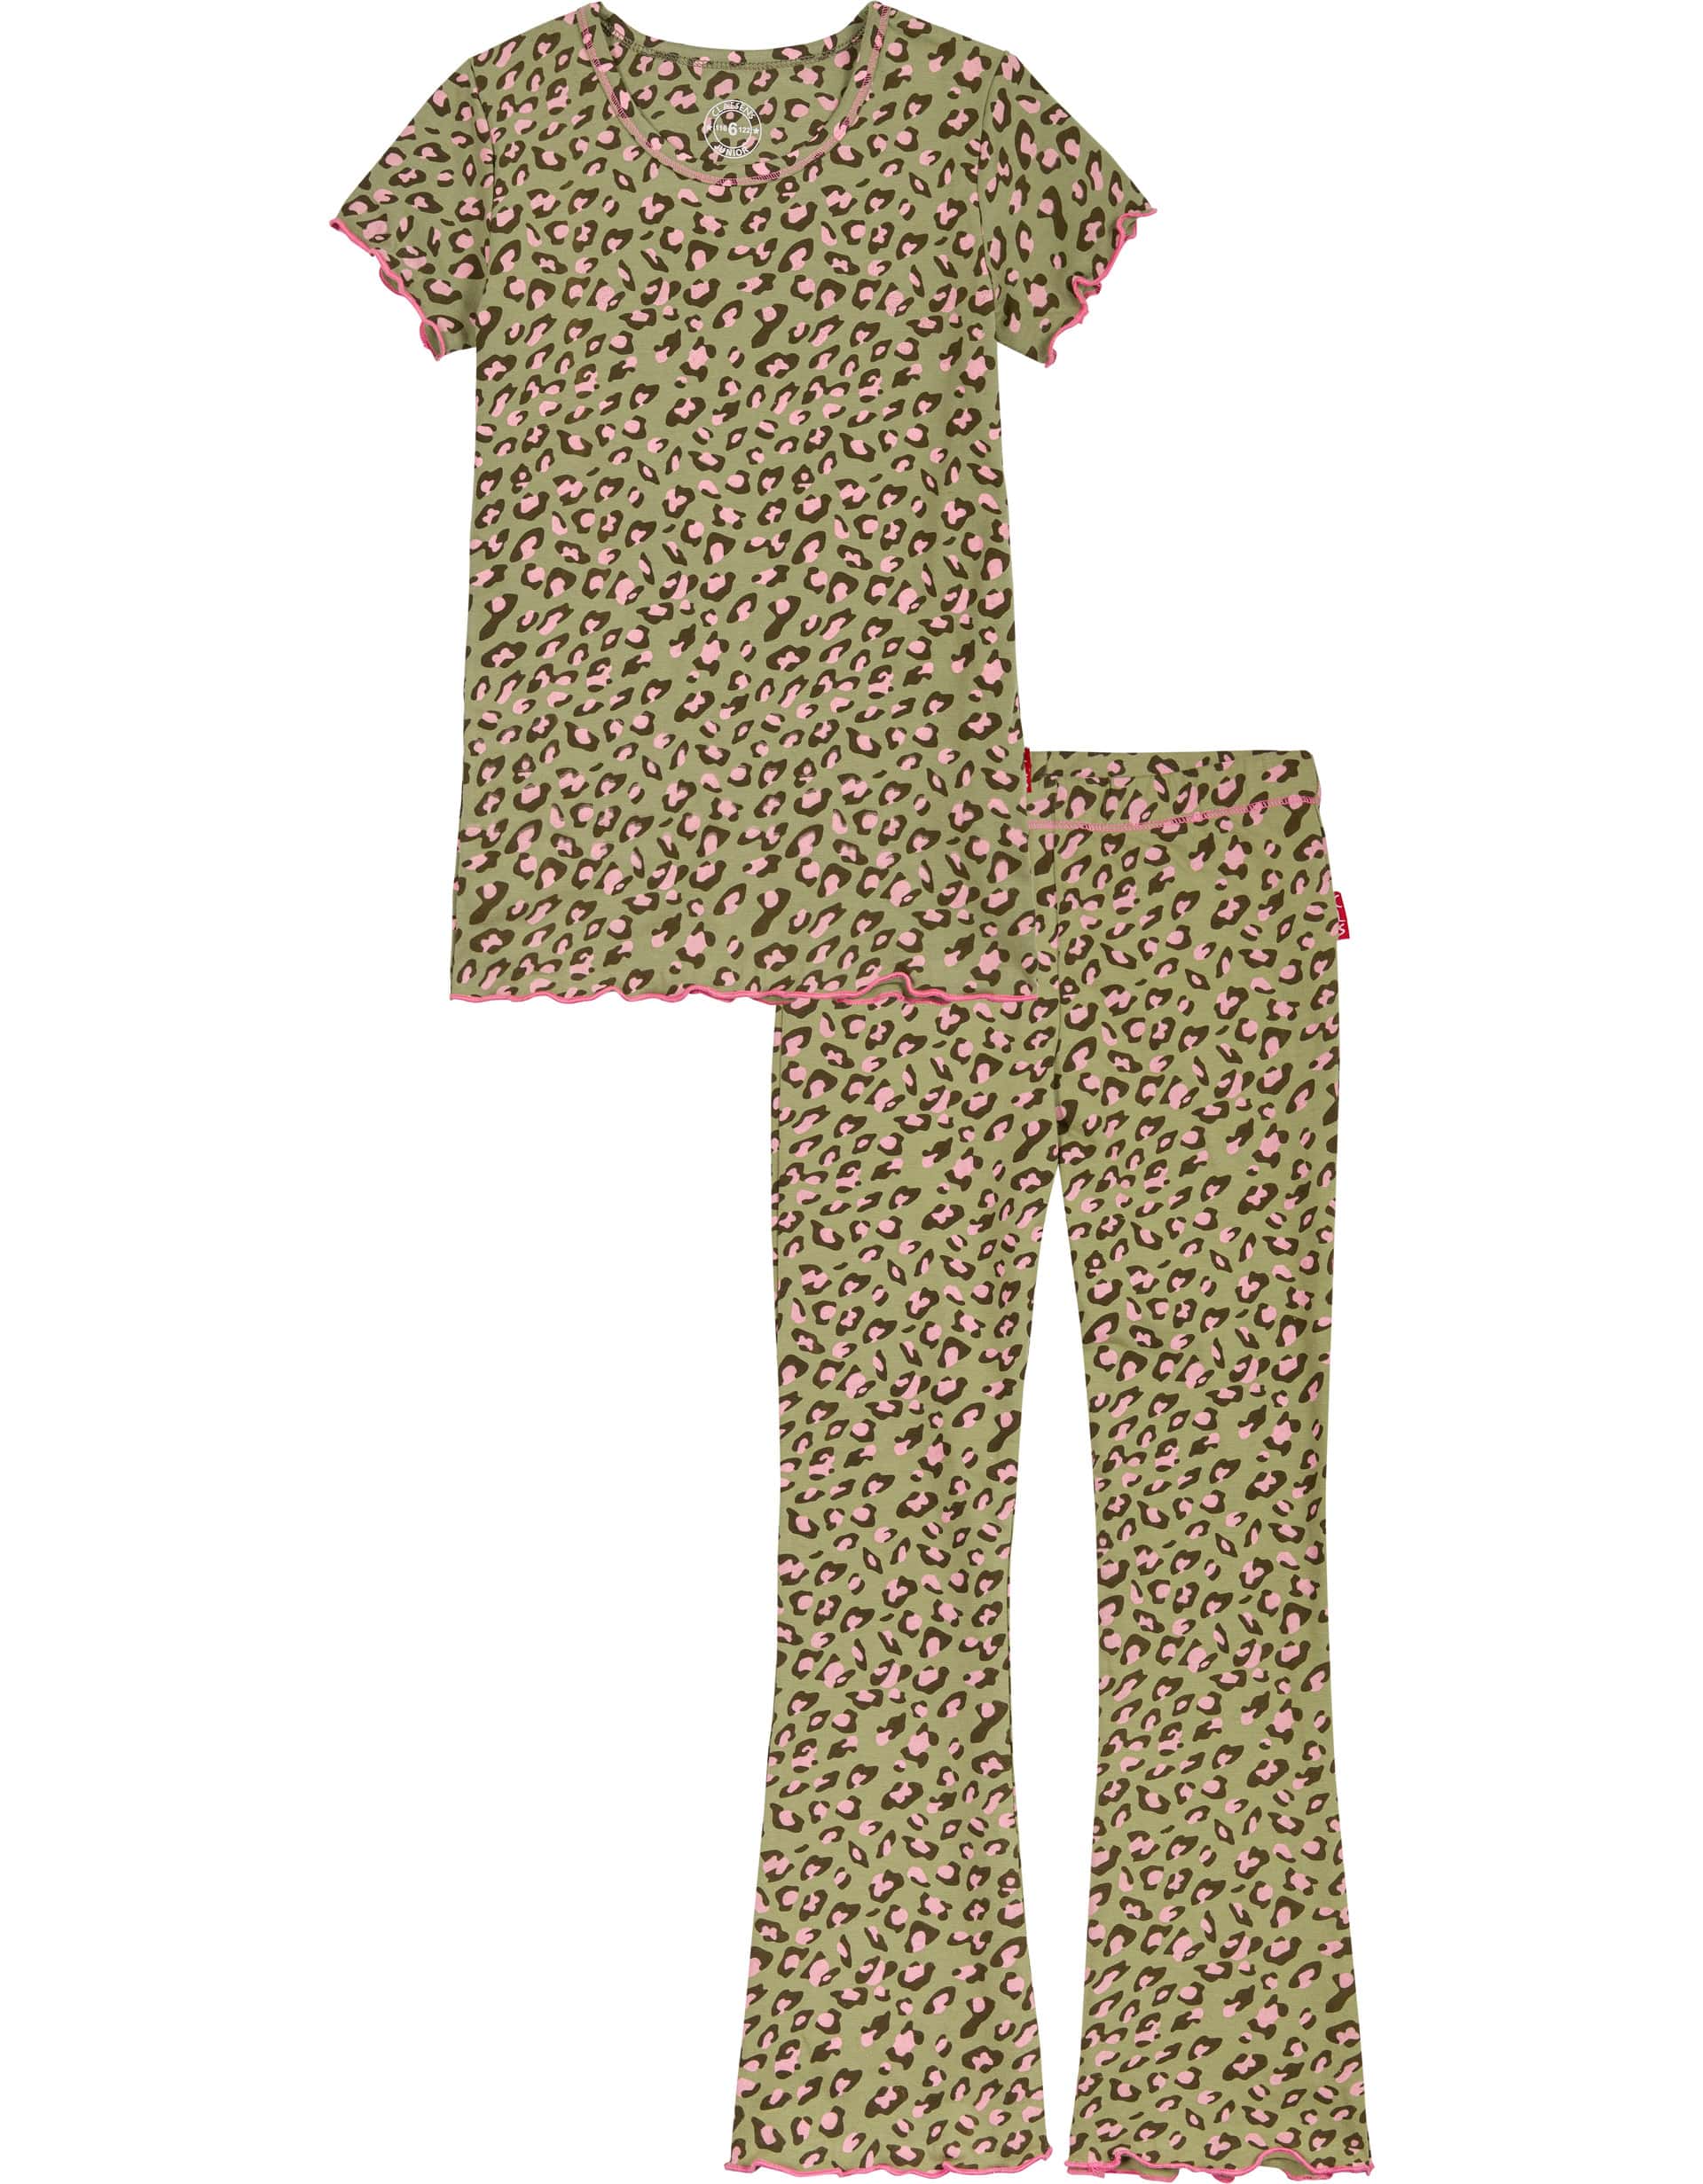 Pyjama Neon Leopard